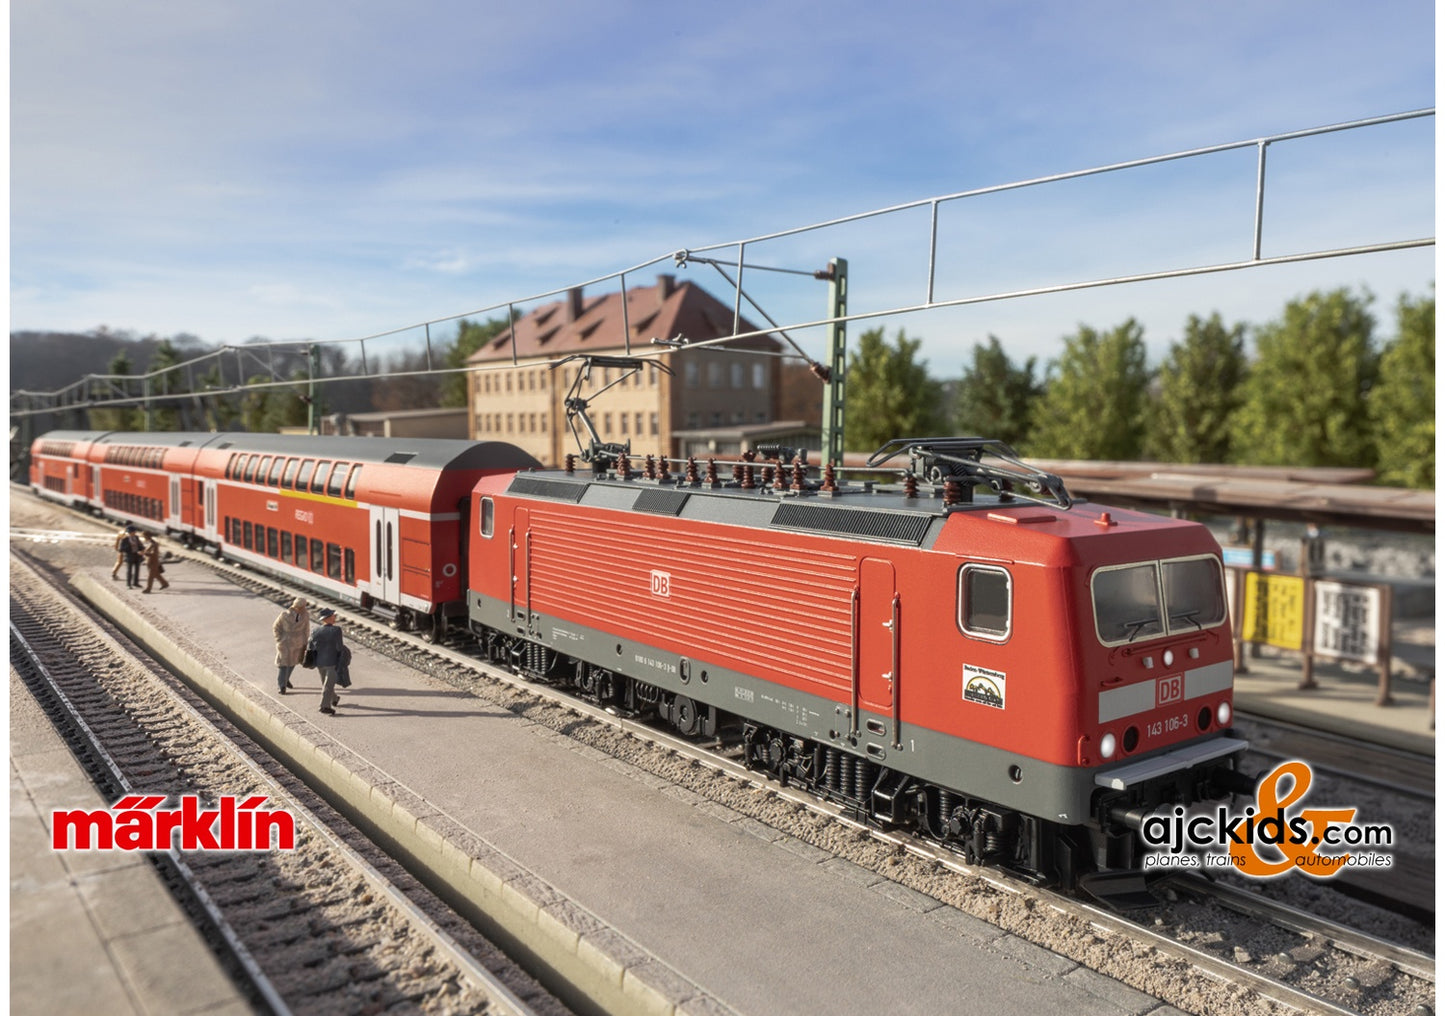 Marklin 37425 - Class 143 Electric Locomotive